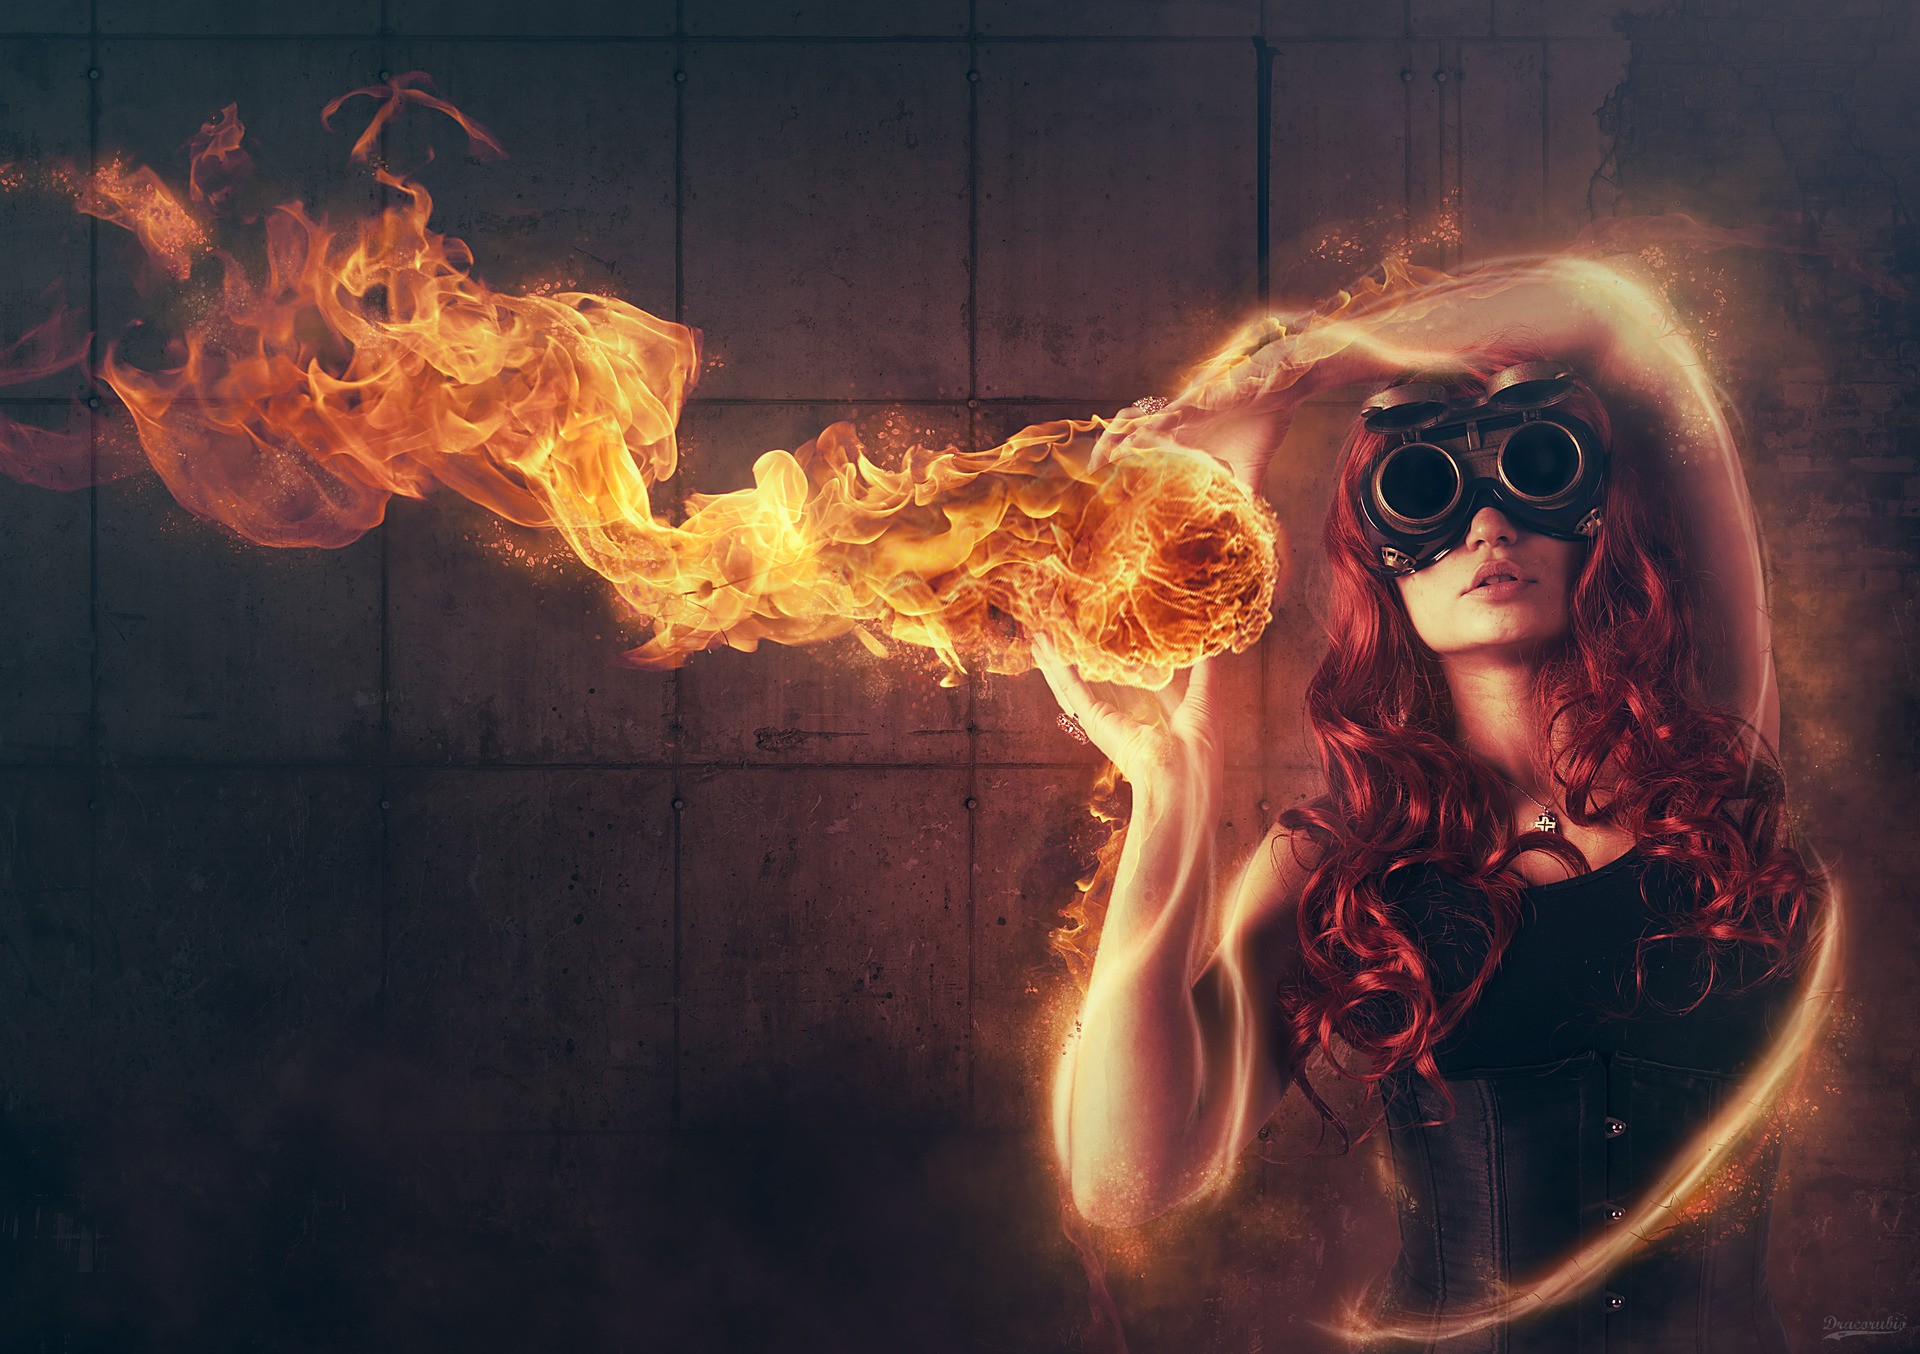 women, flames, fire, digital art, Anne, photo manipulation, Roderique Arisiaman aka Dracorubio, fire dancing, fireball, burning - desktop wallpaper